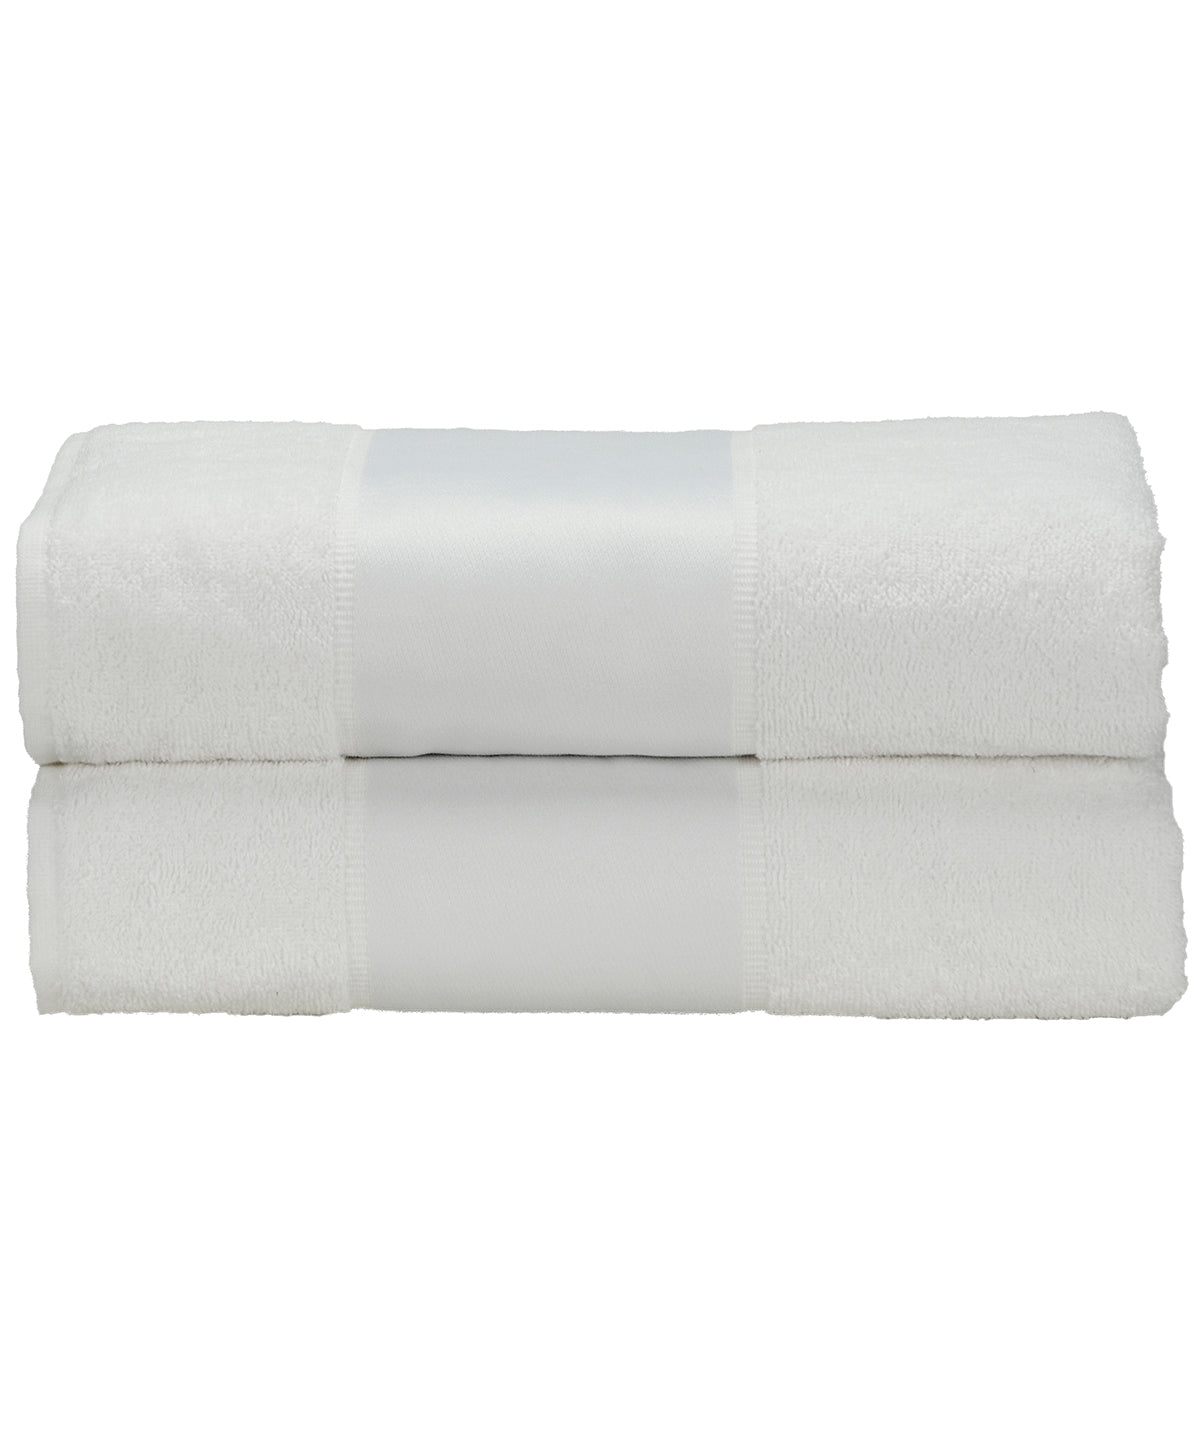 Personalised Towels - White A&R Towels ARTG® SUBLI-Me® bath towel